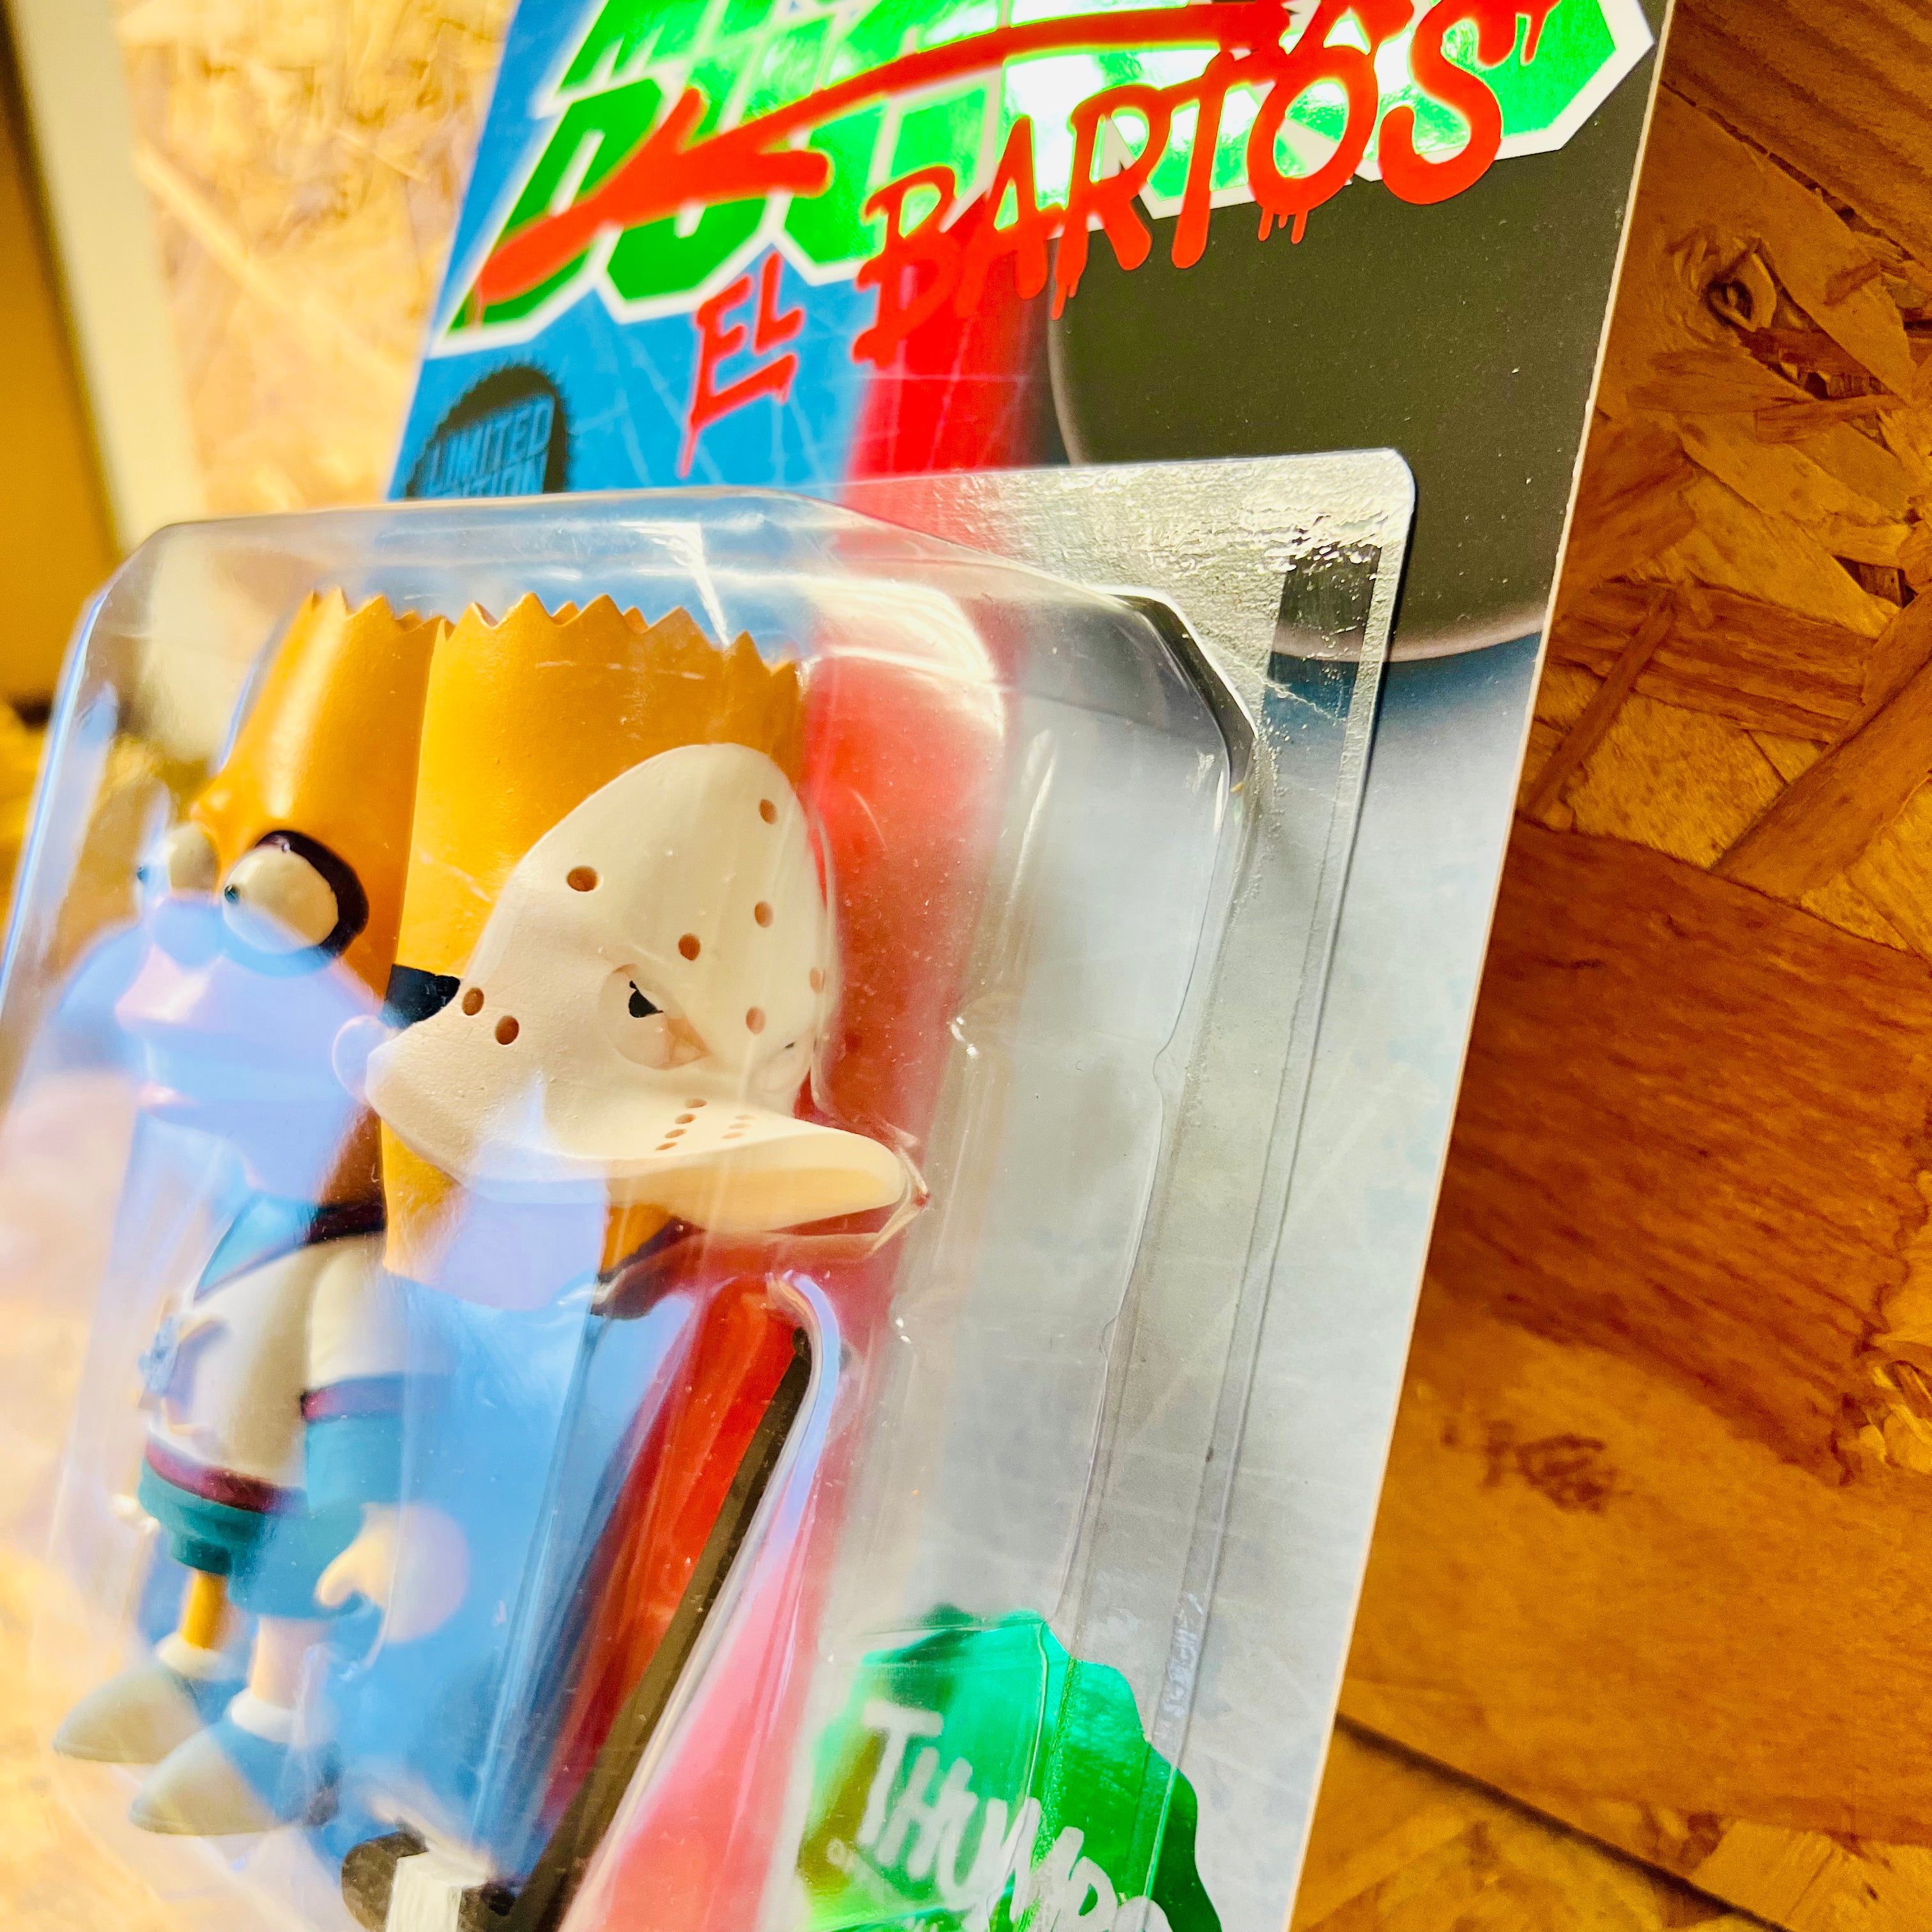 Mighty El Barto "Home Jersey" Collectible Toy